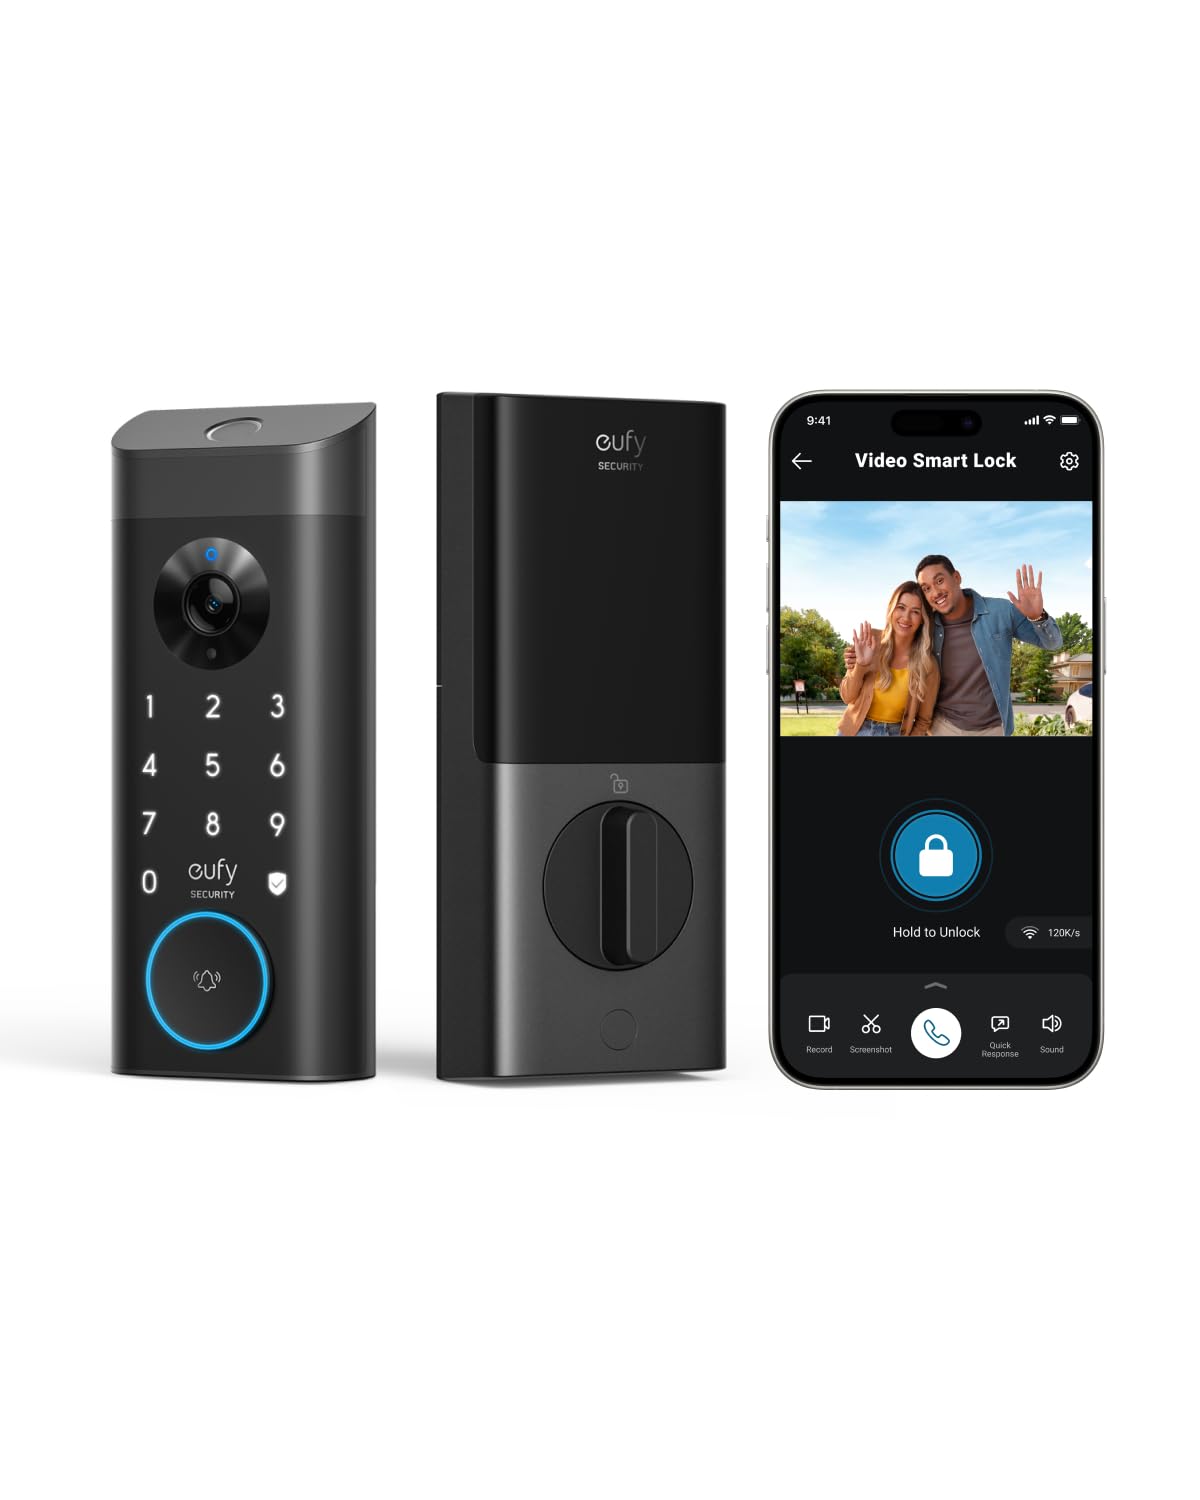 eufy e330 2k Video Smart Lock3 in 1 Doorbell Camera $196 & More + Free Shipping